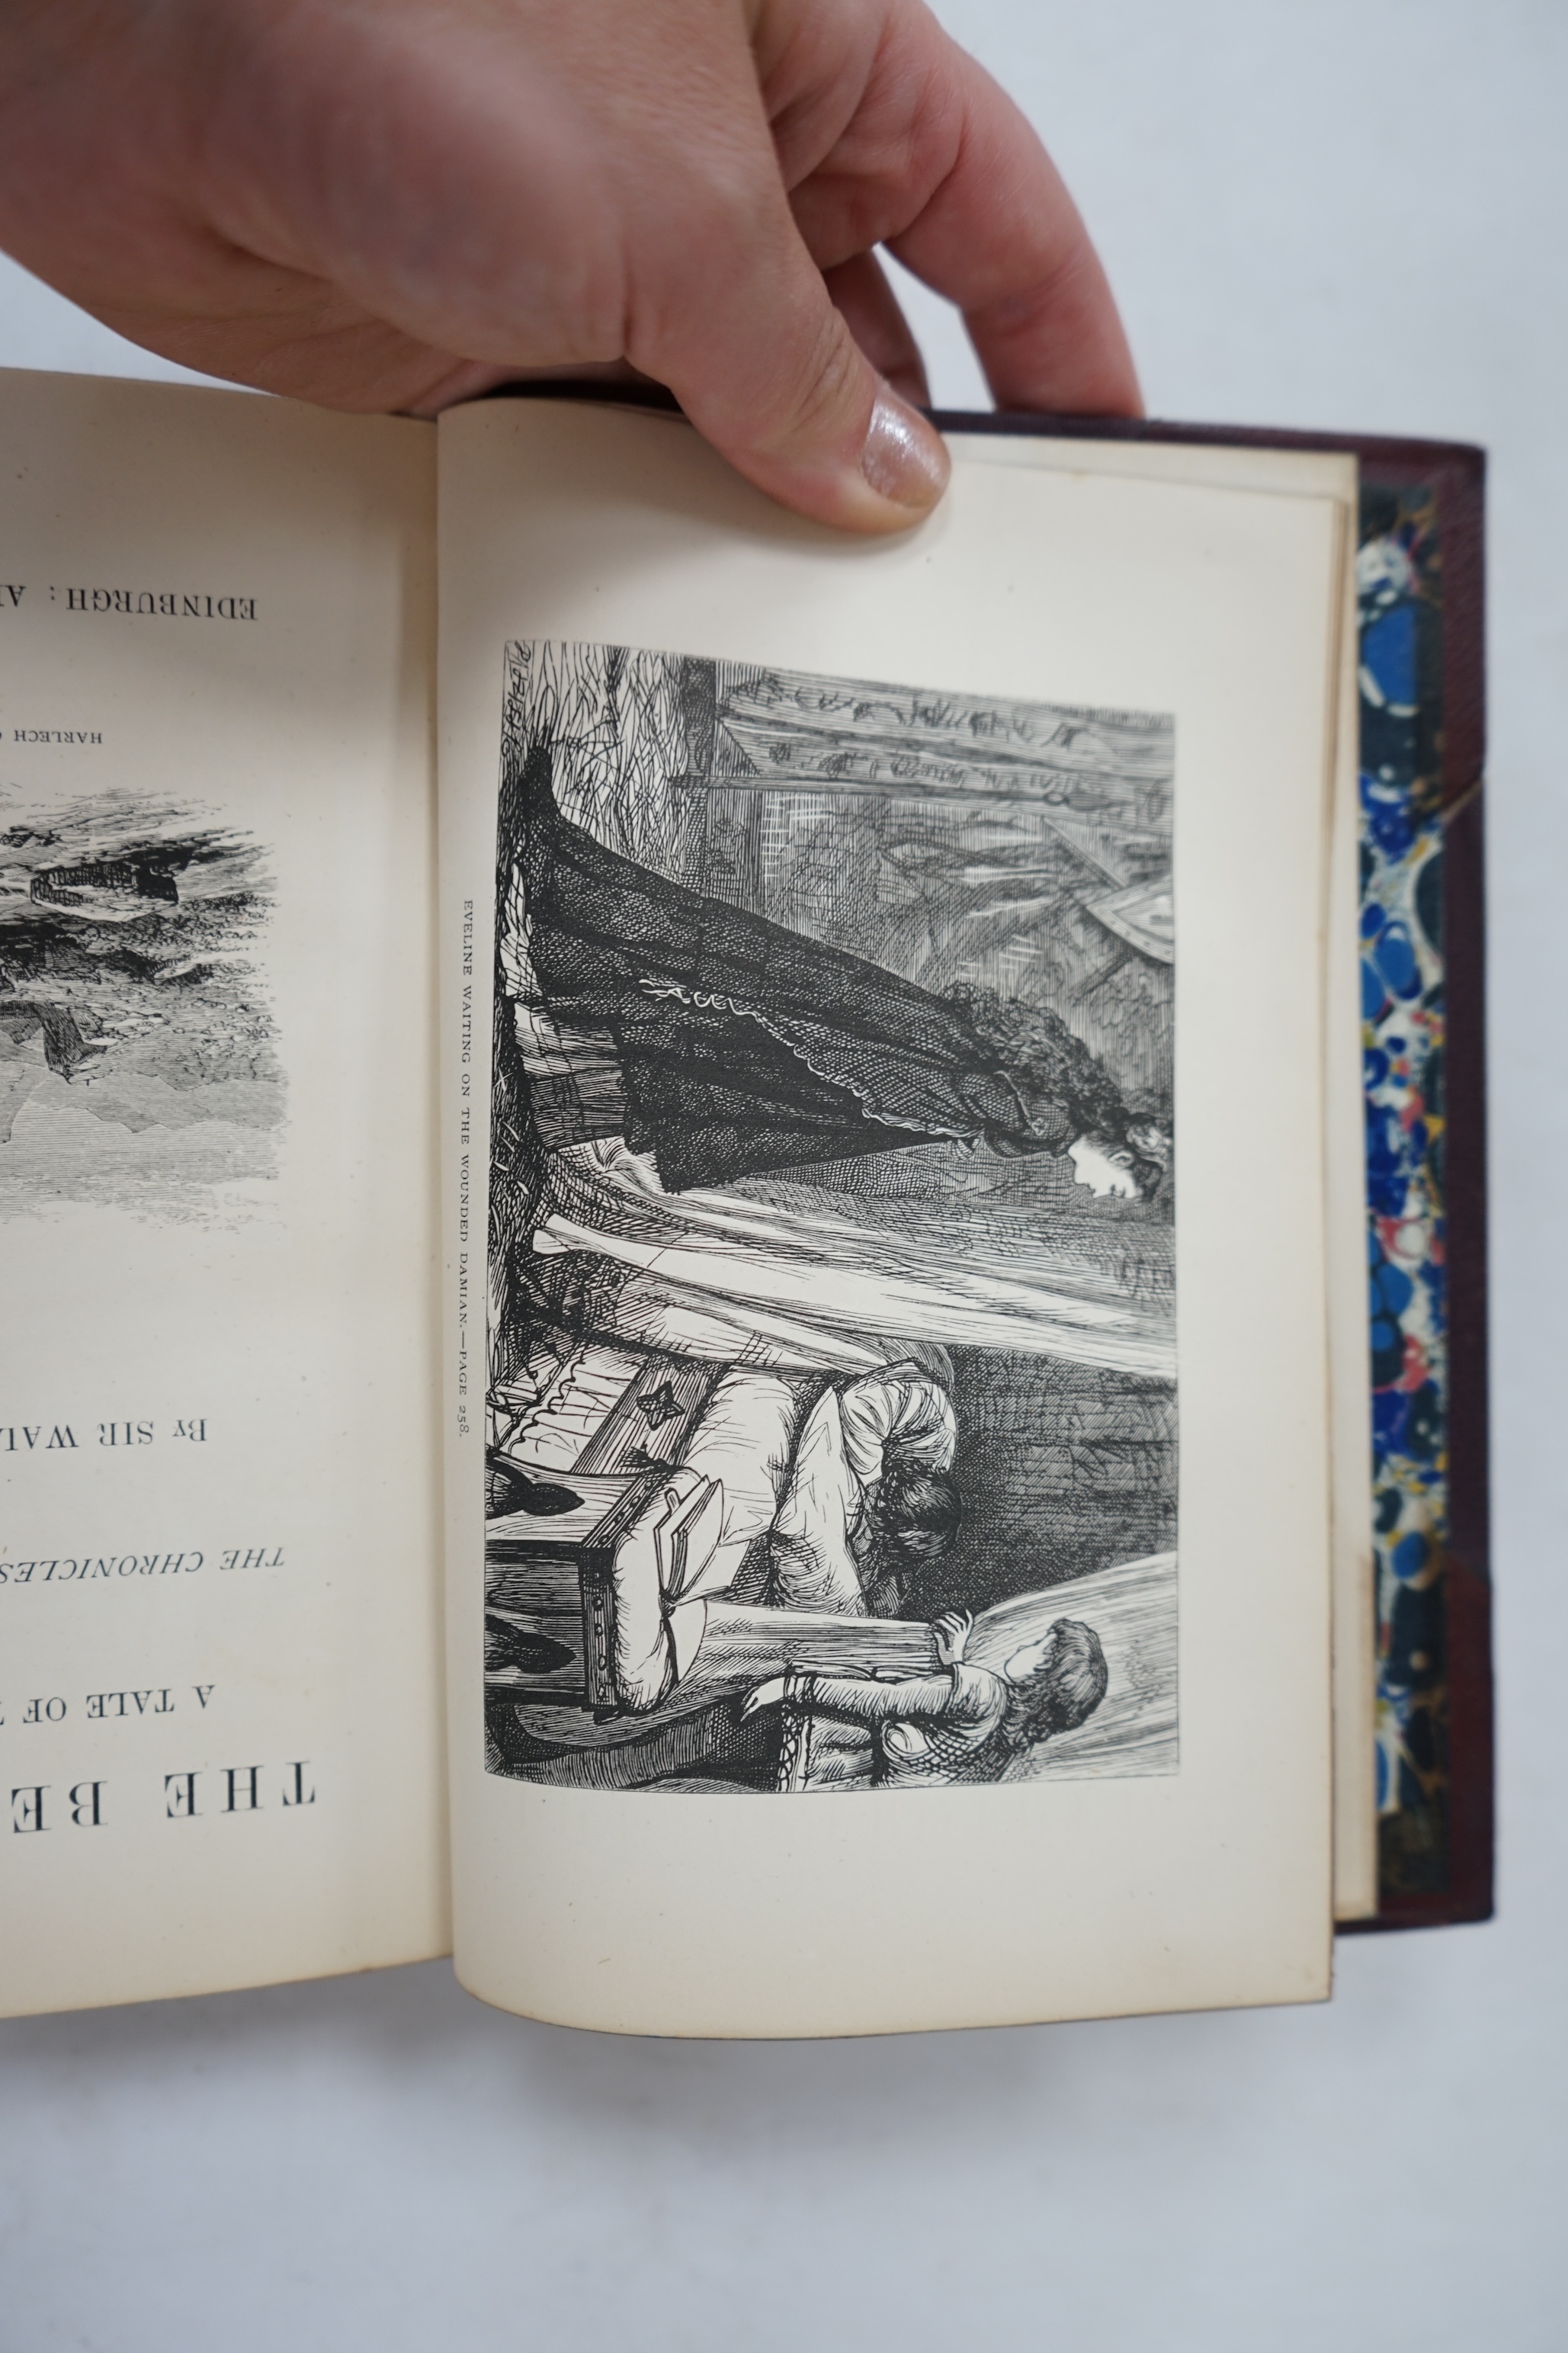 Scott, Sir Walter - Waverley Novels, Centenary Edition, 8vo. half morocco, 25 vols, A & C Black, Edinburgh 1871